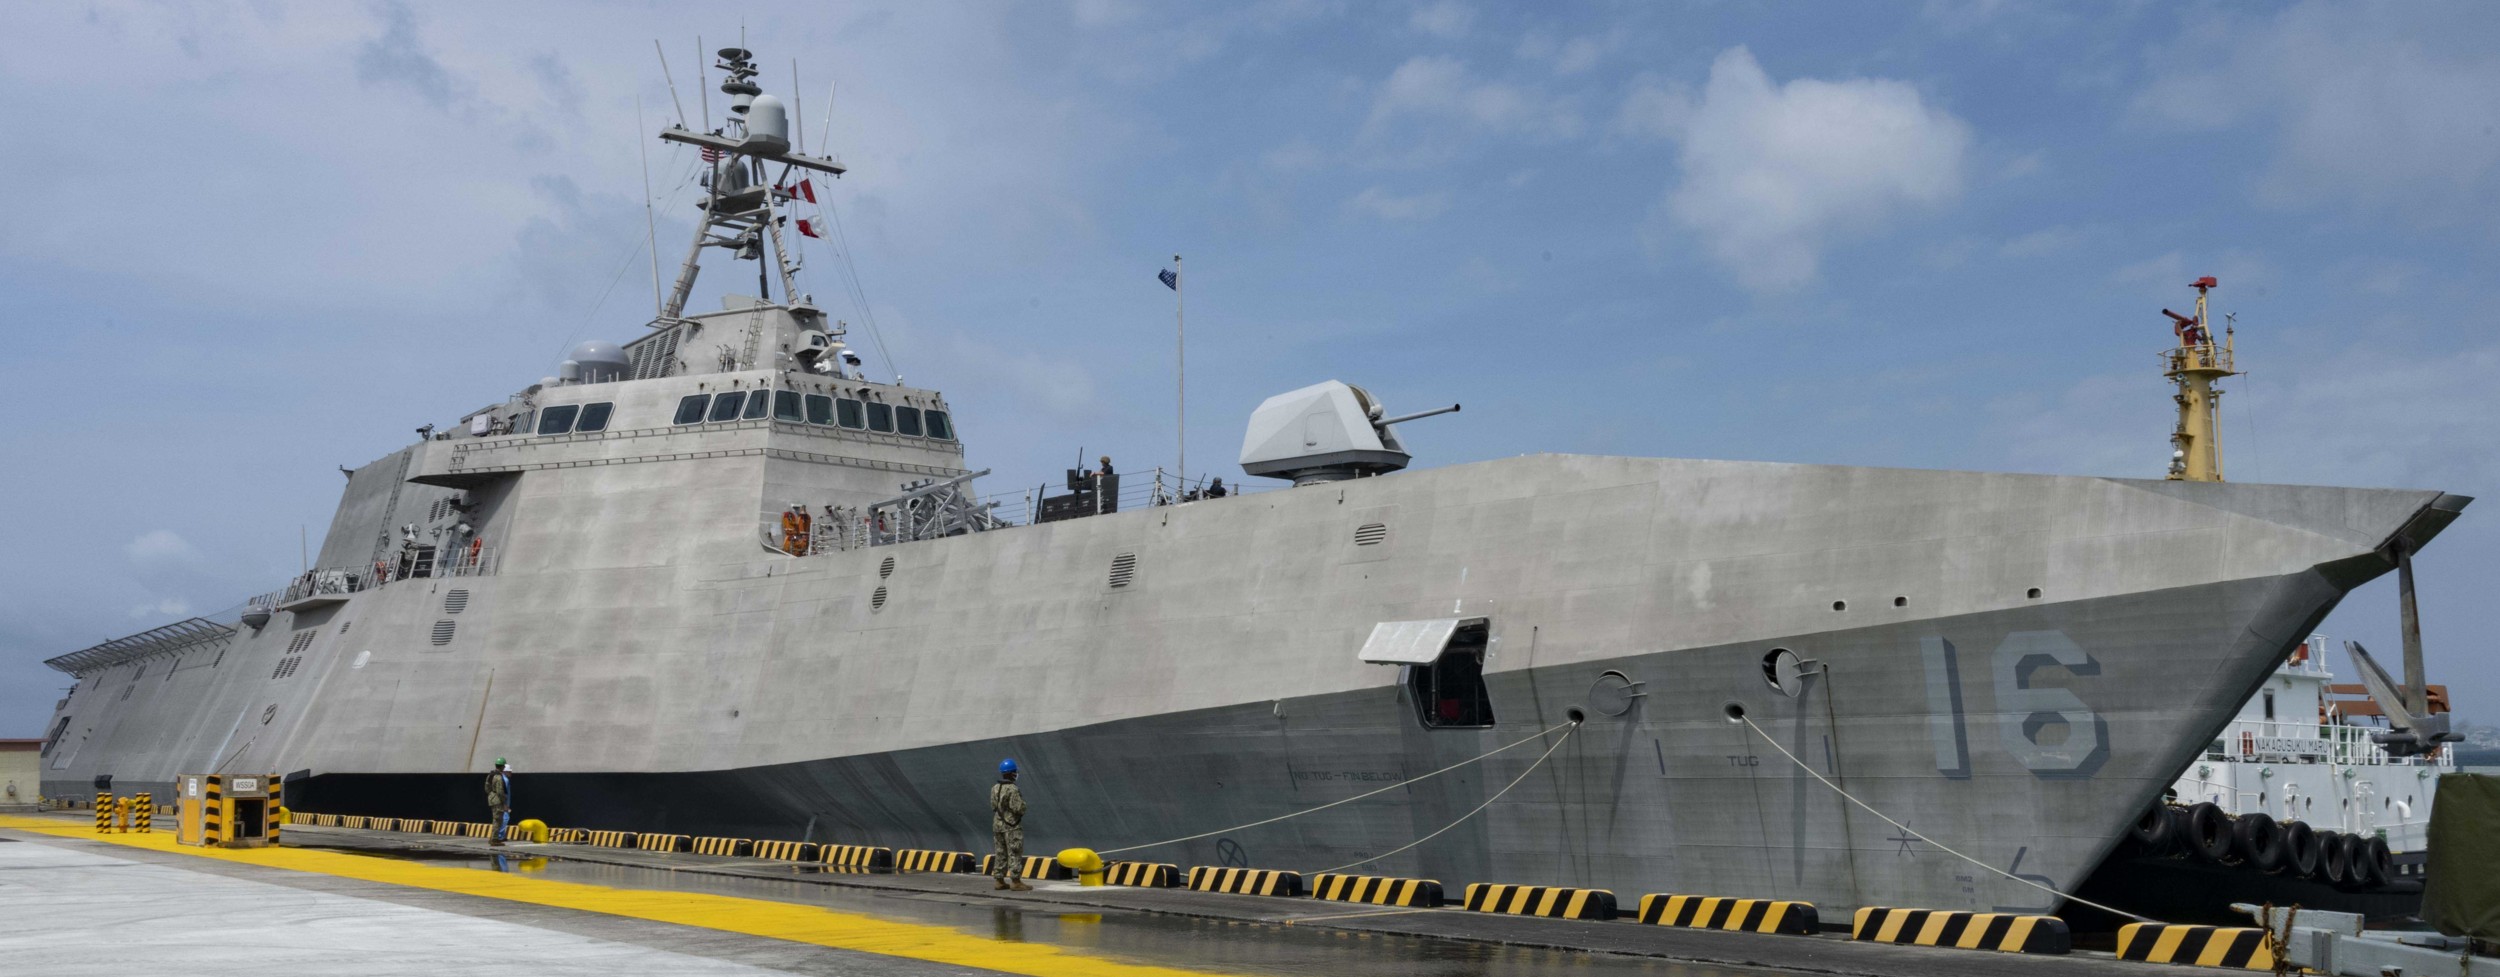 lcs-16 uss tulsa independence class littoral combat ship us navy white beach okinawa japan 35